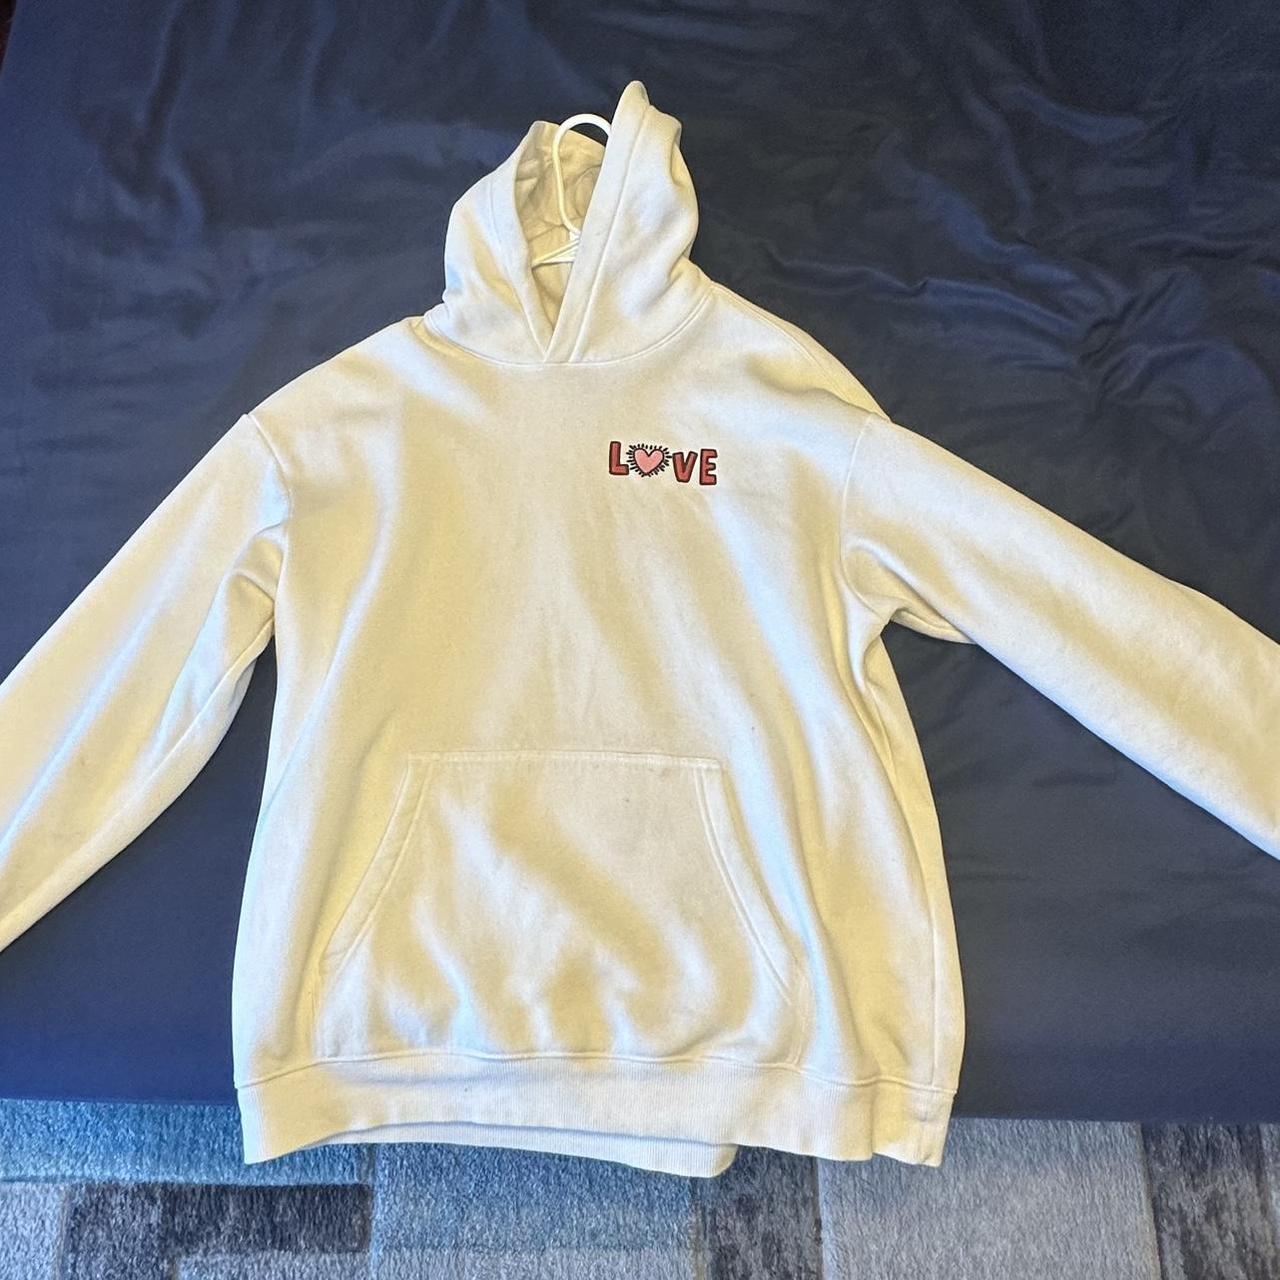 LOVE sweatshirt one small stain - Depop